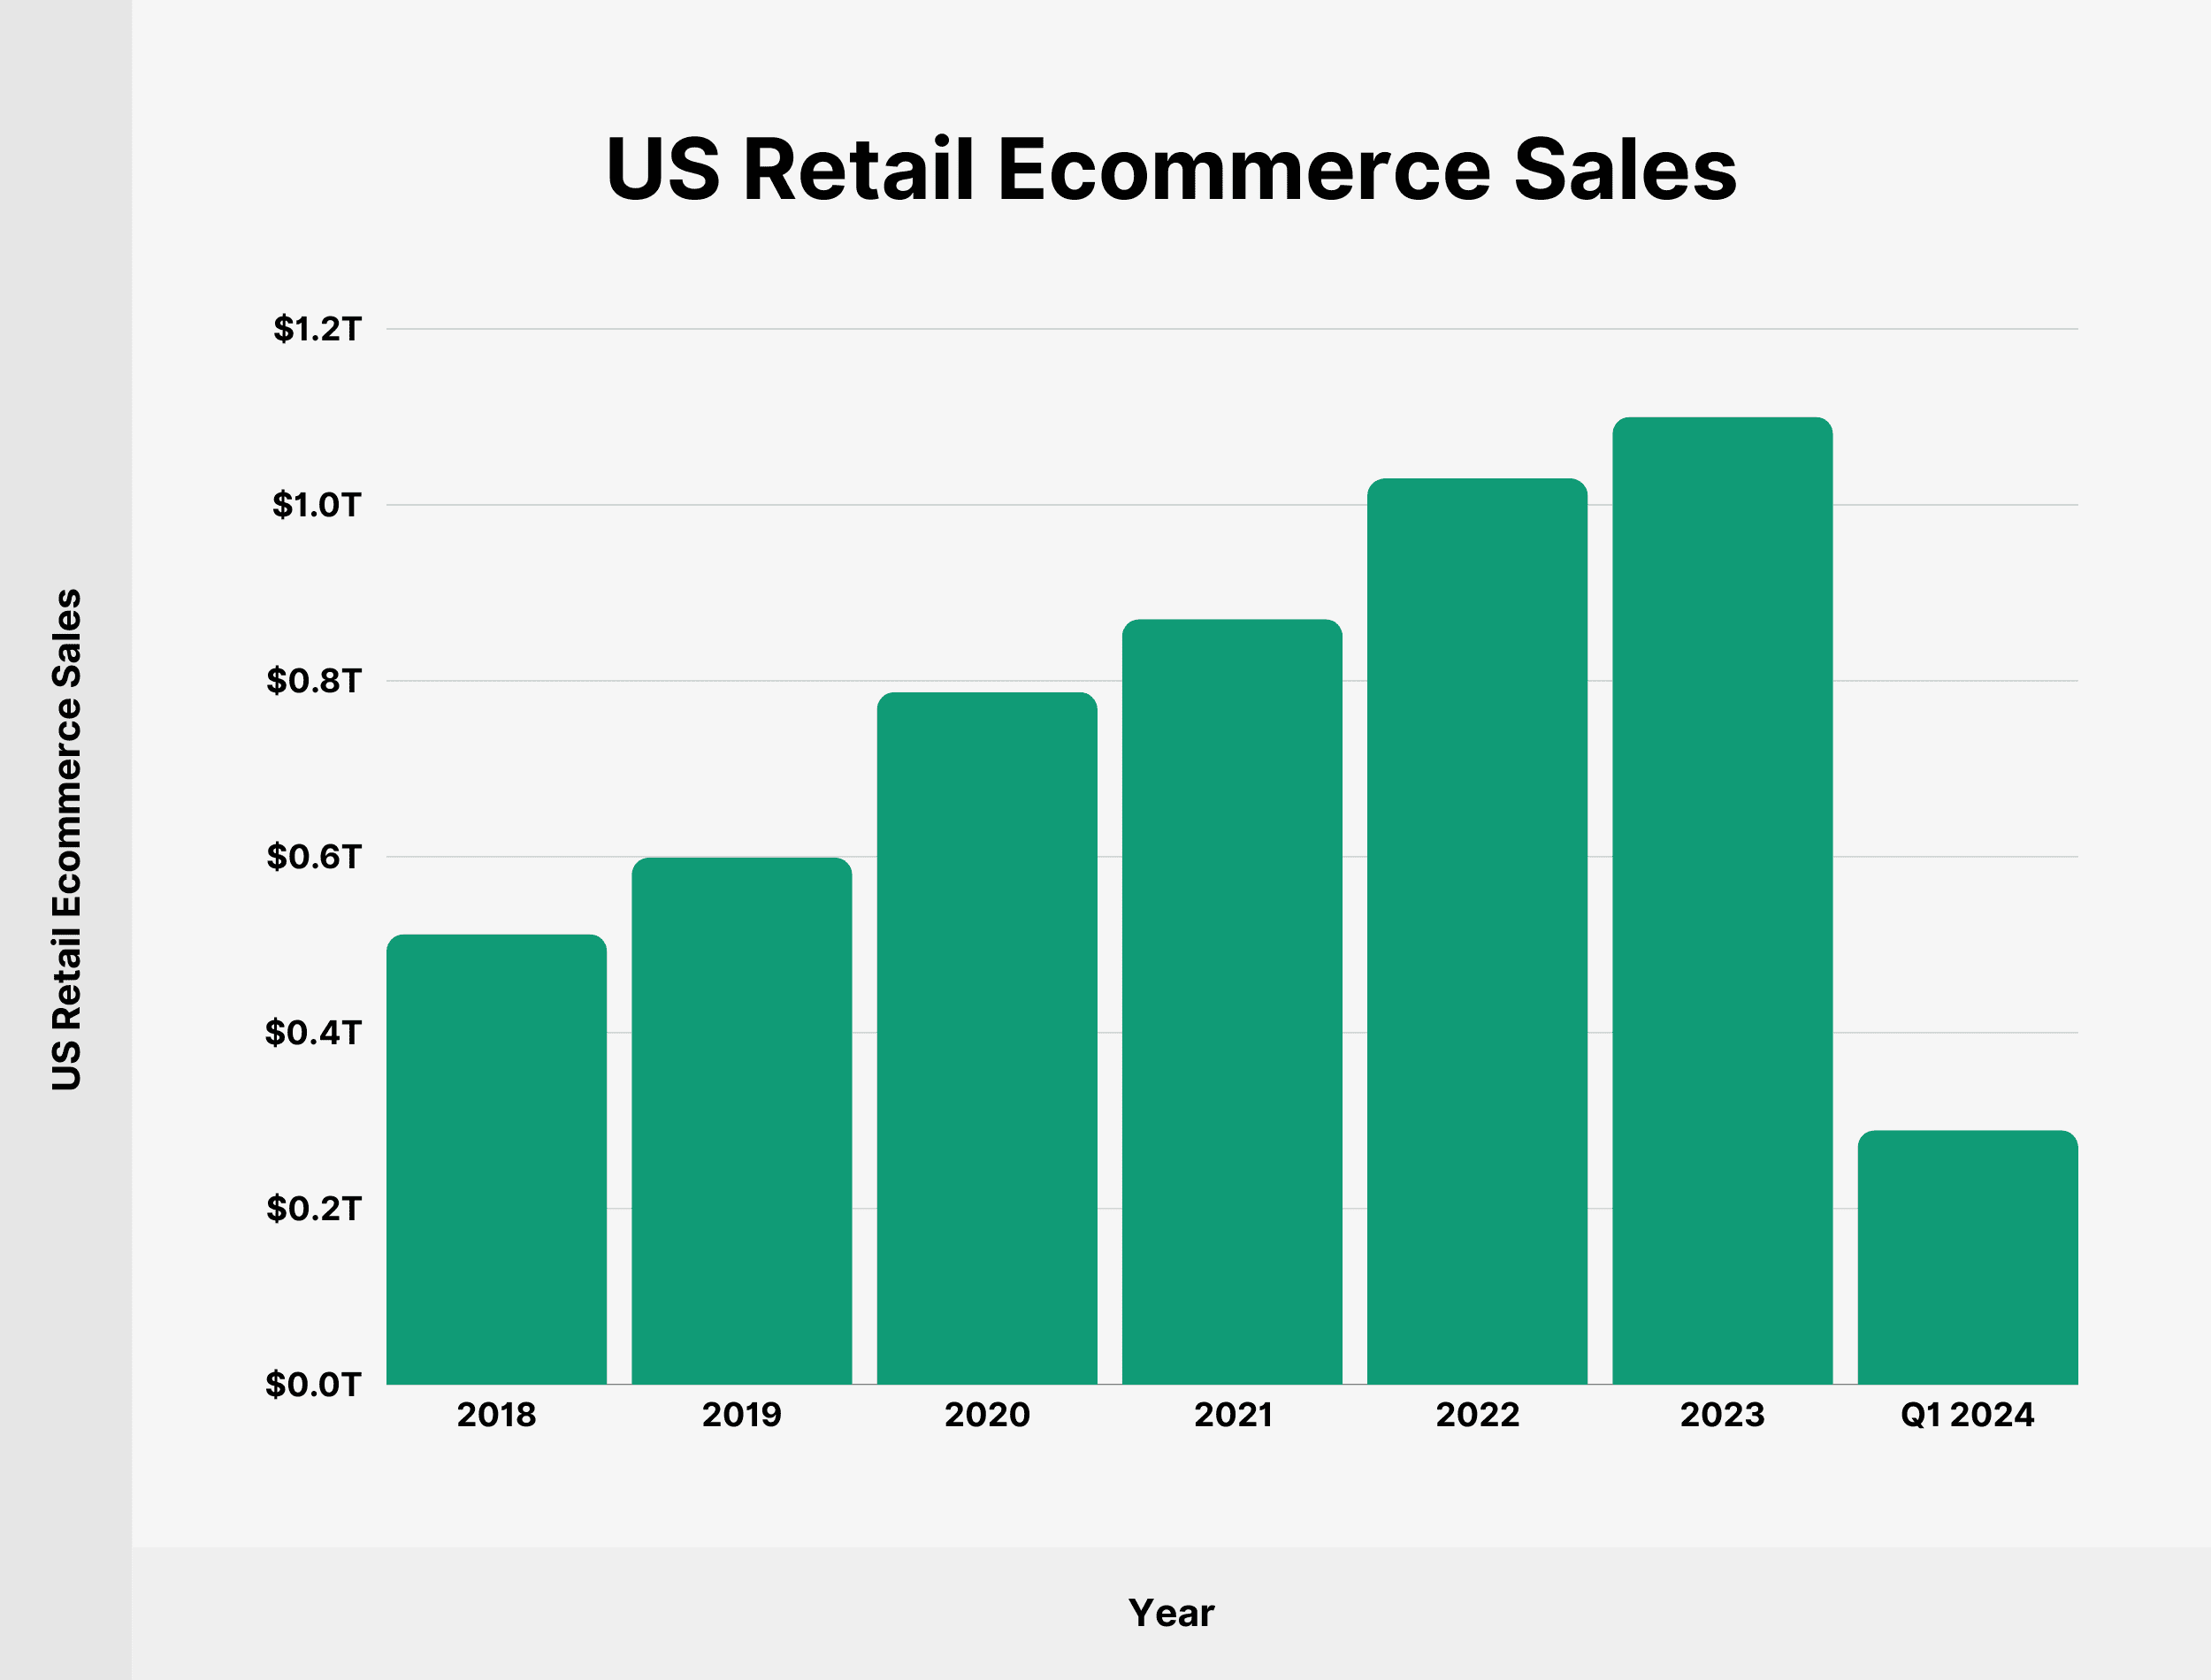 US Retail Ecommerce Sales